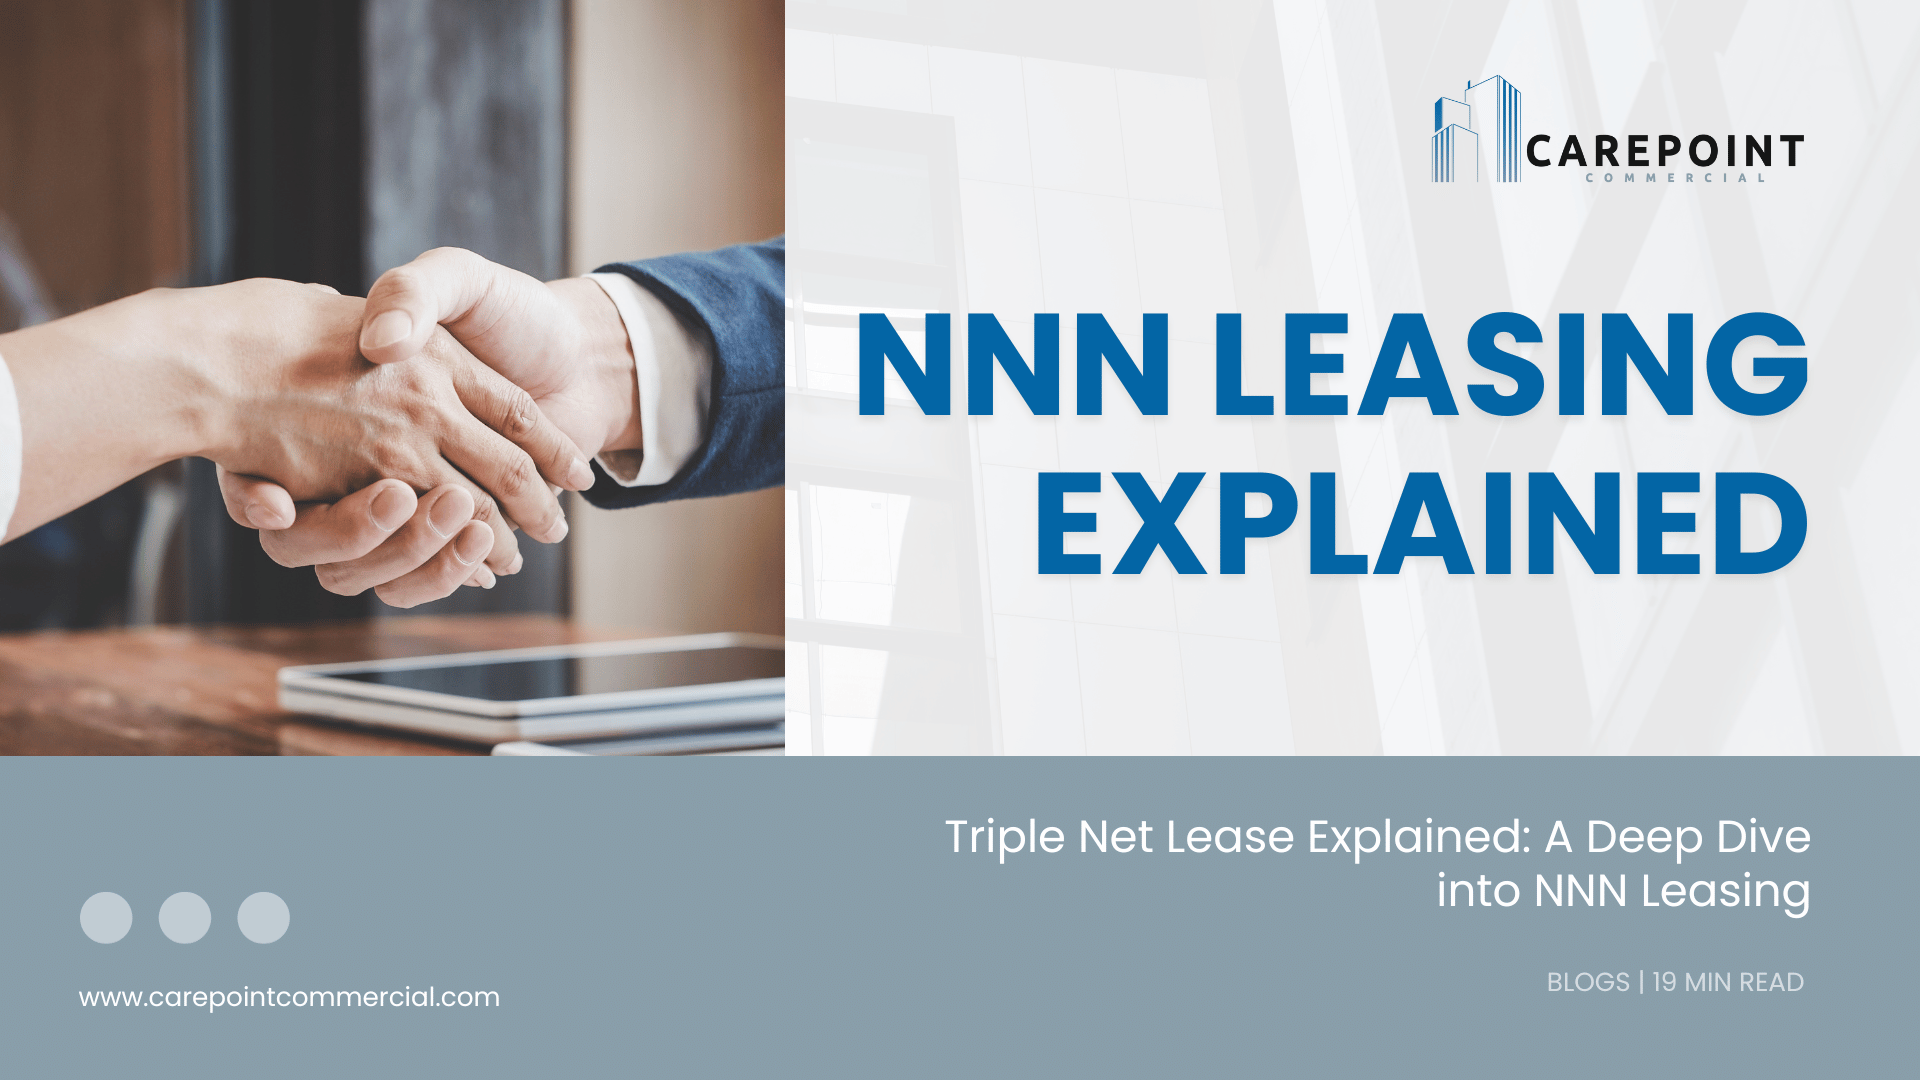 Triple Net Lease Explained: A Deep Dive into NNN Leasing